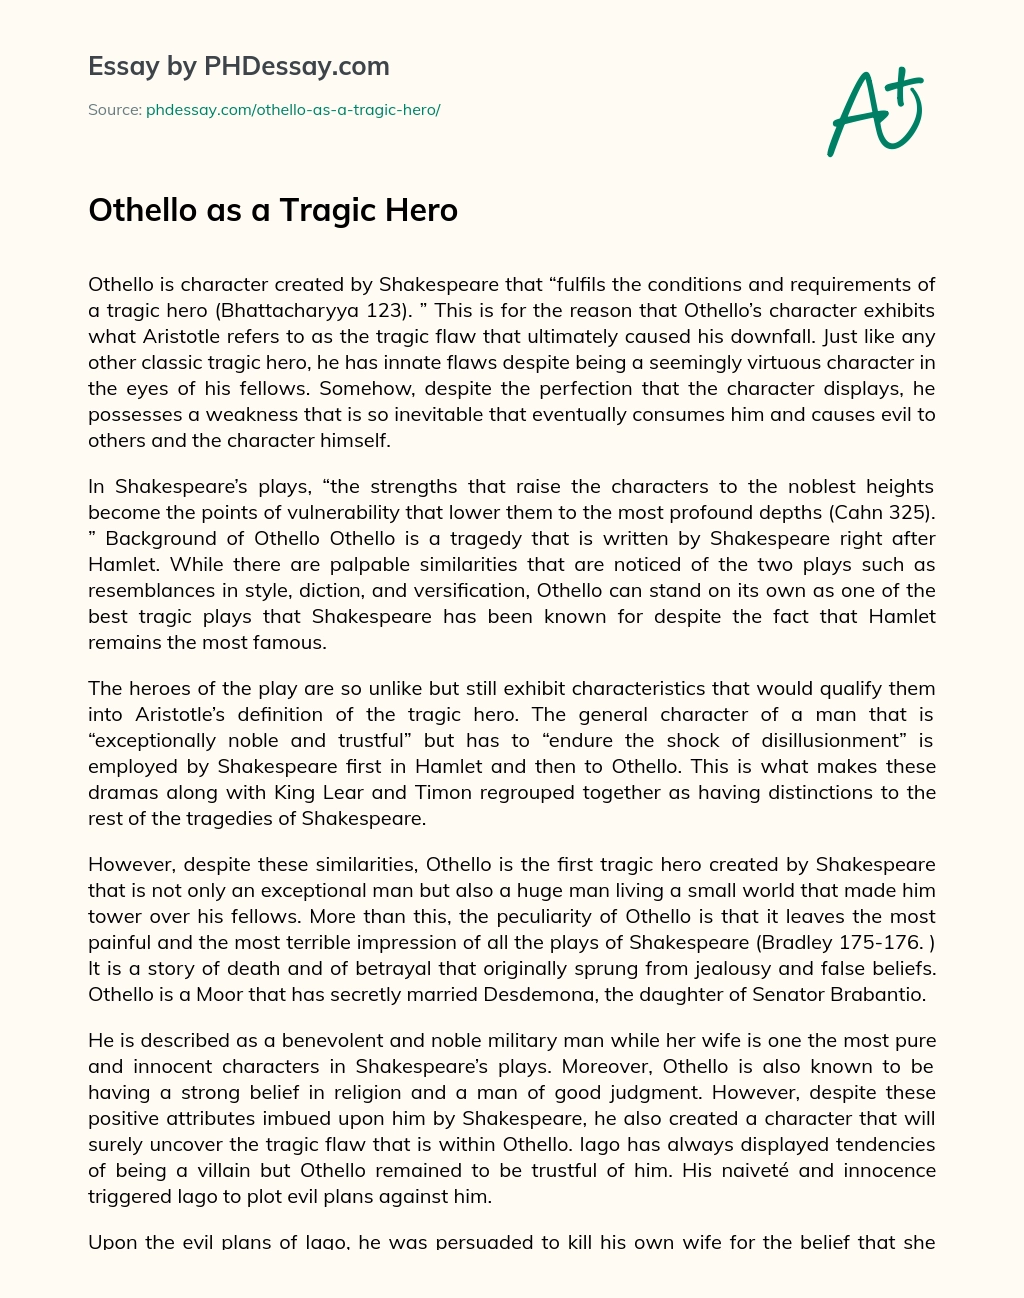 Othello as a Tragic Hero essay